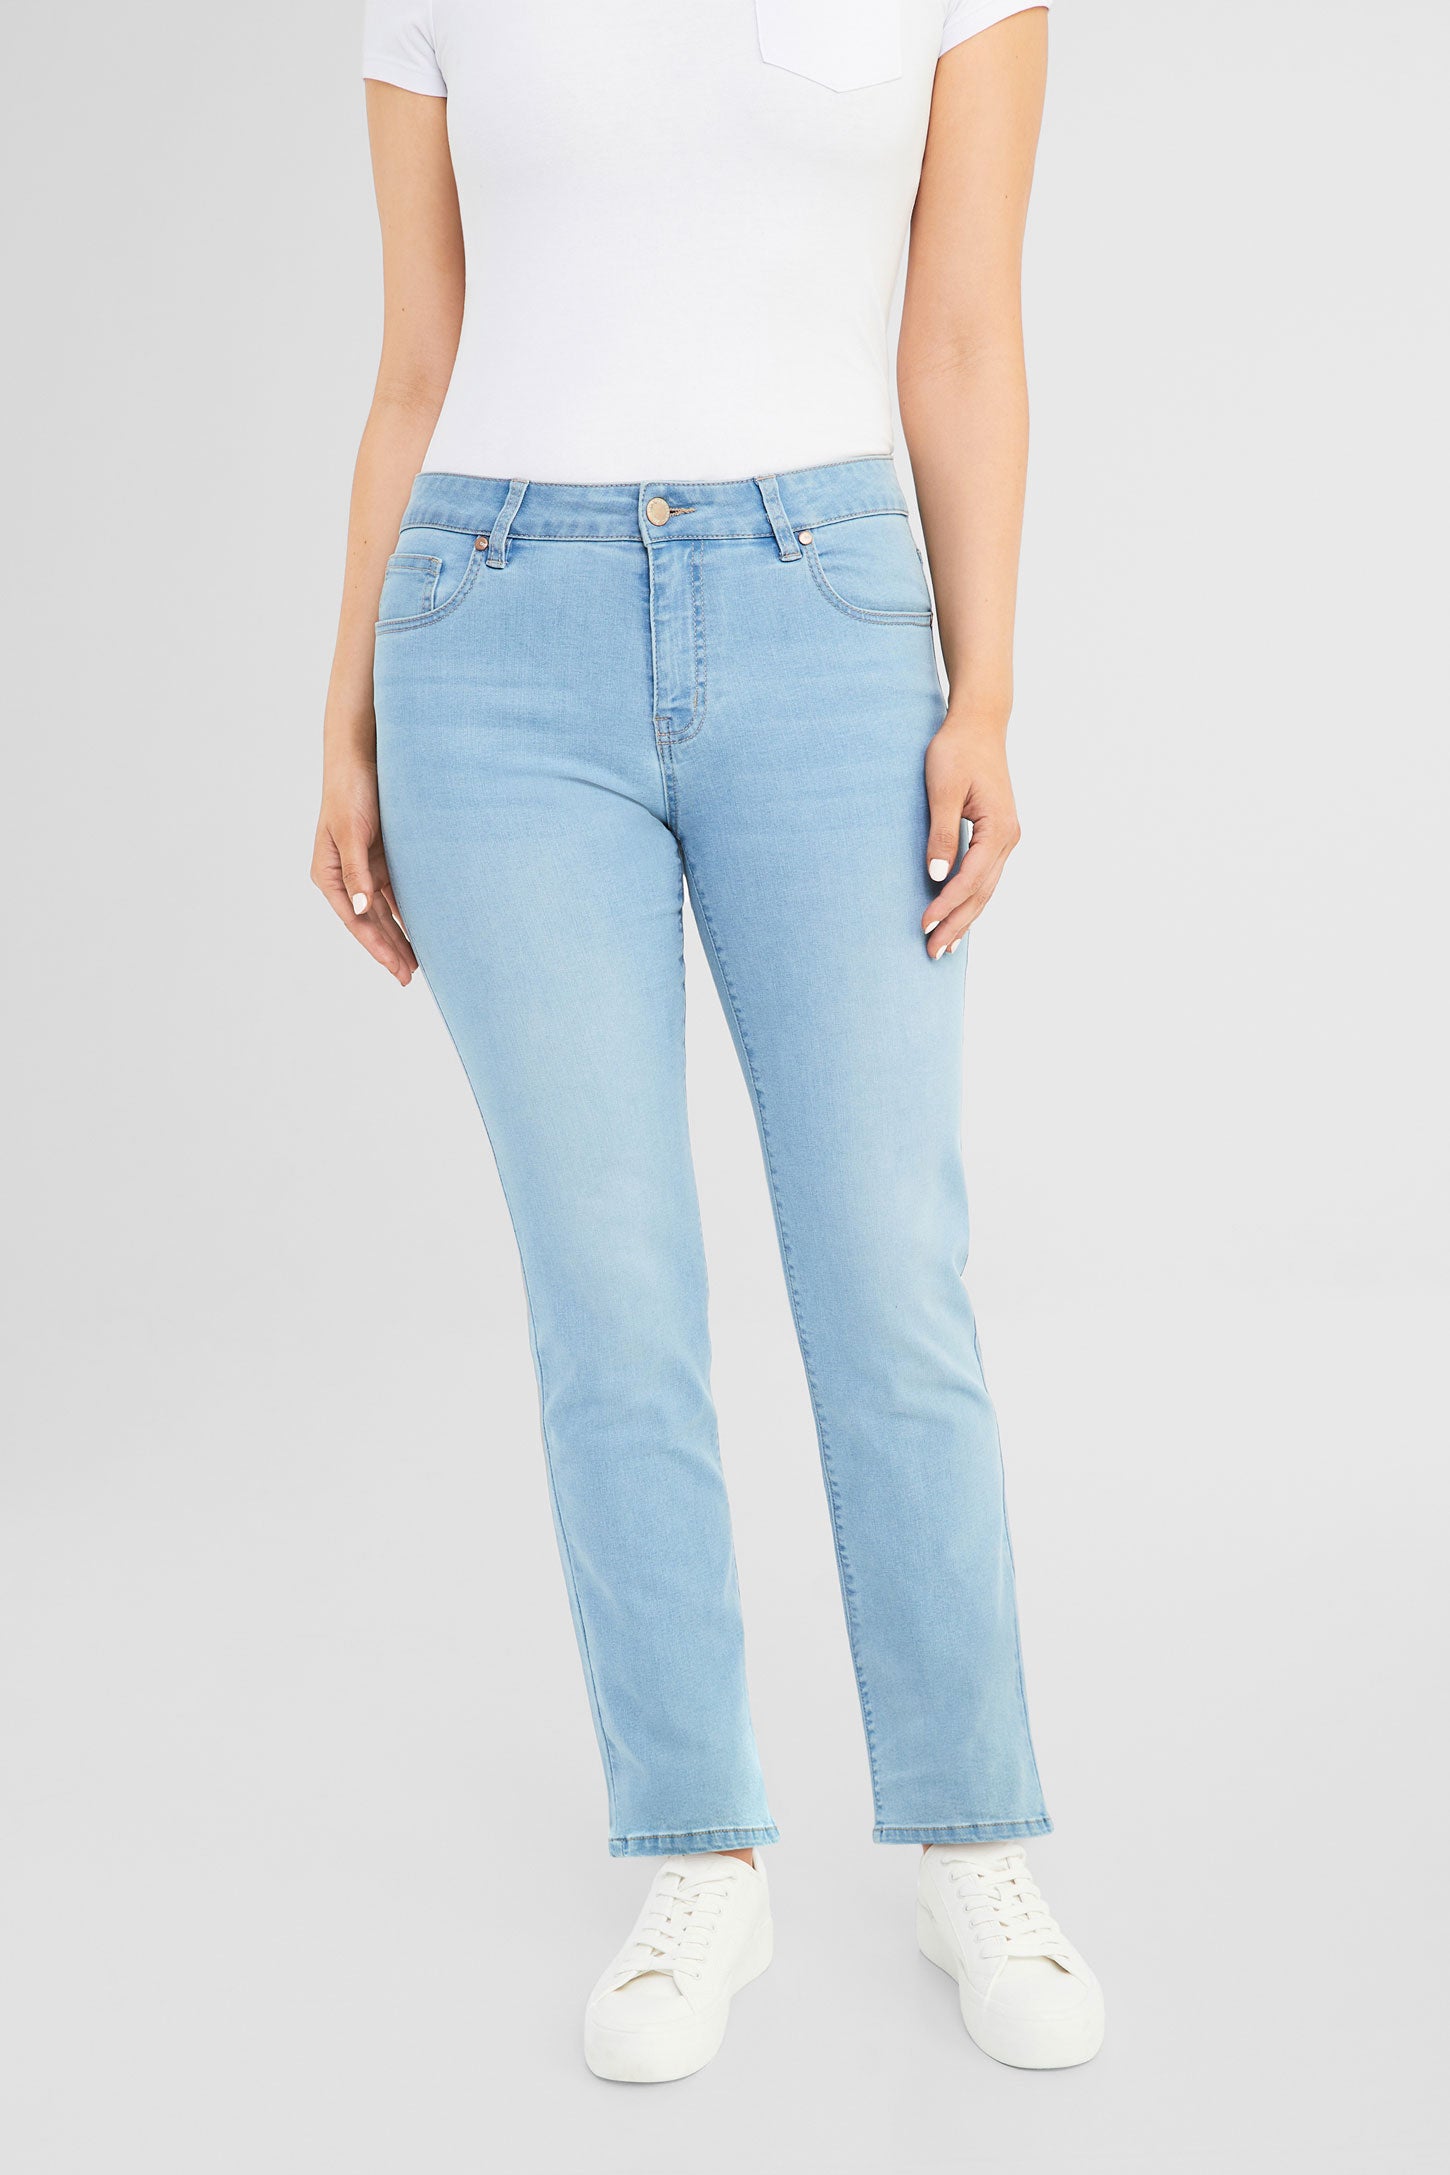 Jeans 5 poches à jambe droite - Femme && BLEU CLAIR